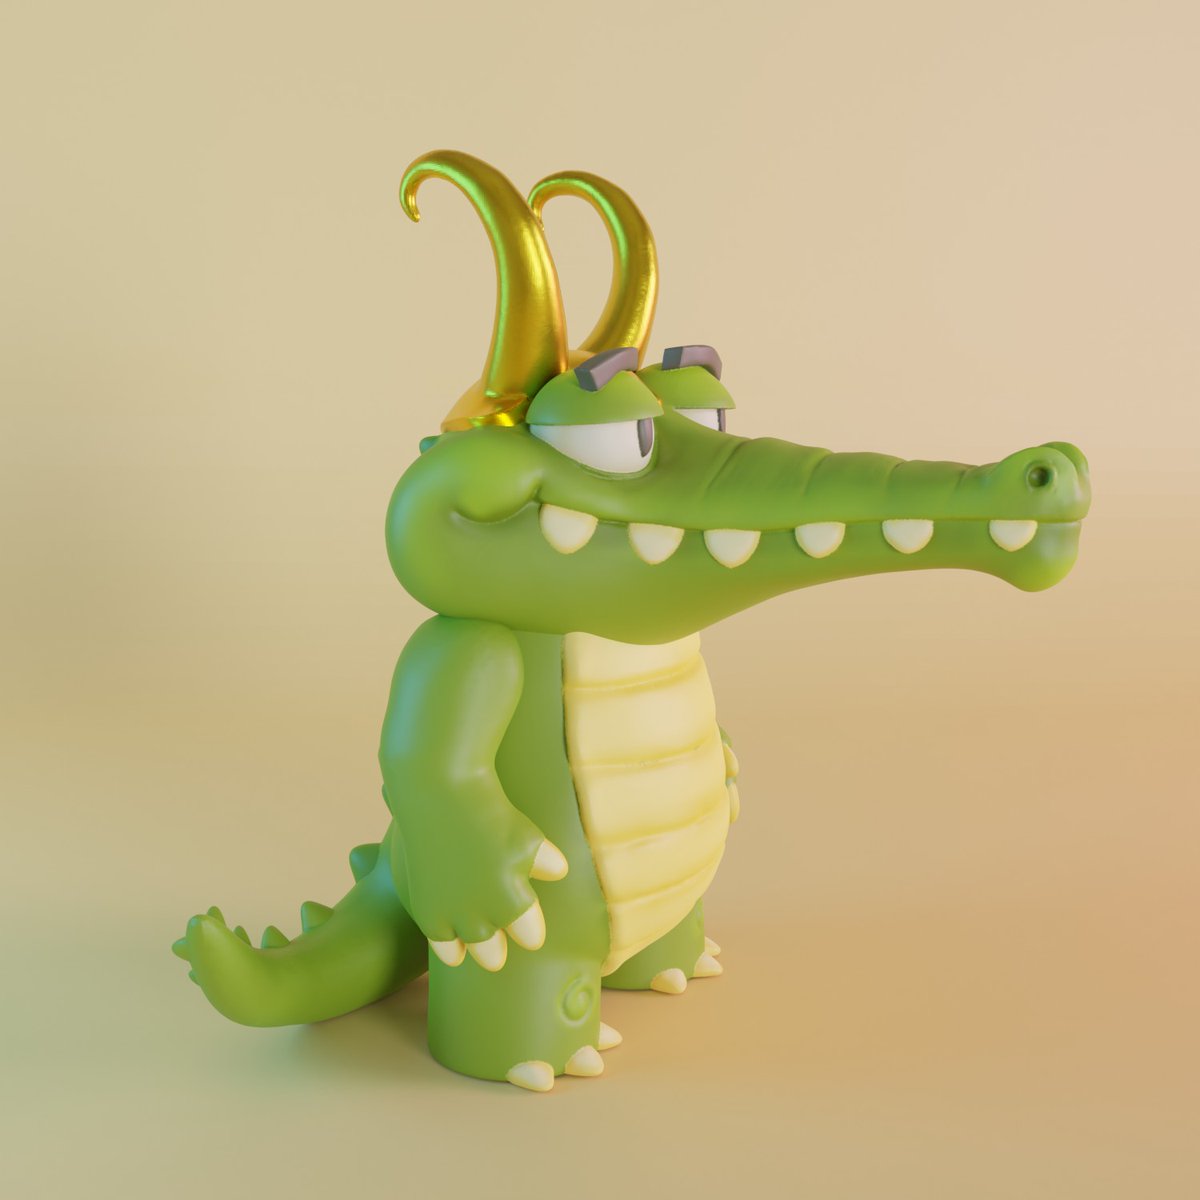 🐊 Get this Adorable 3D Printable Alligator Loki Fan Art!
💡 Designed by @tridimagina 
💜 STL file: bit.ly/3wYlbpM